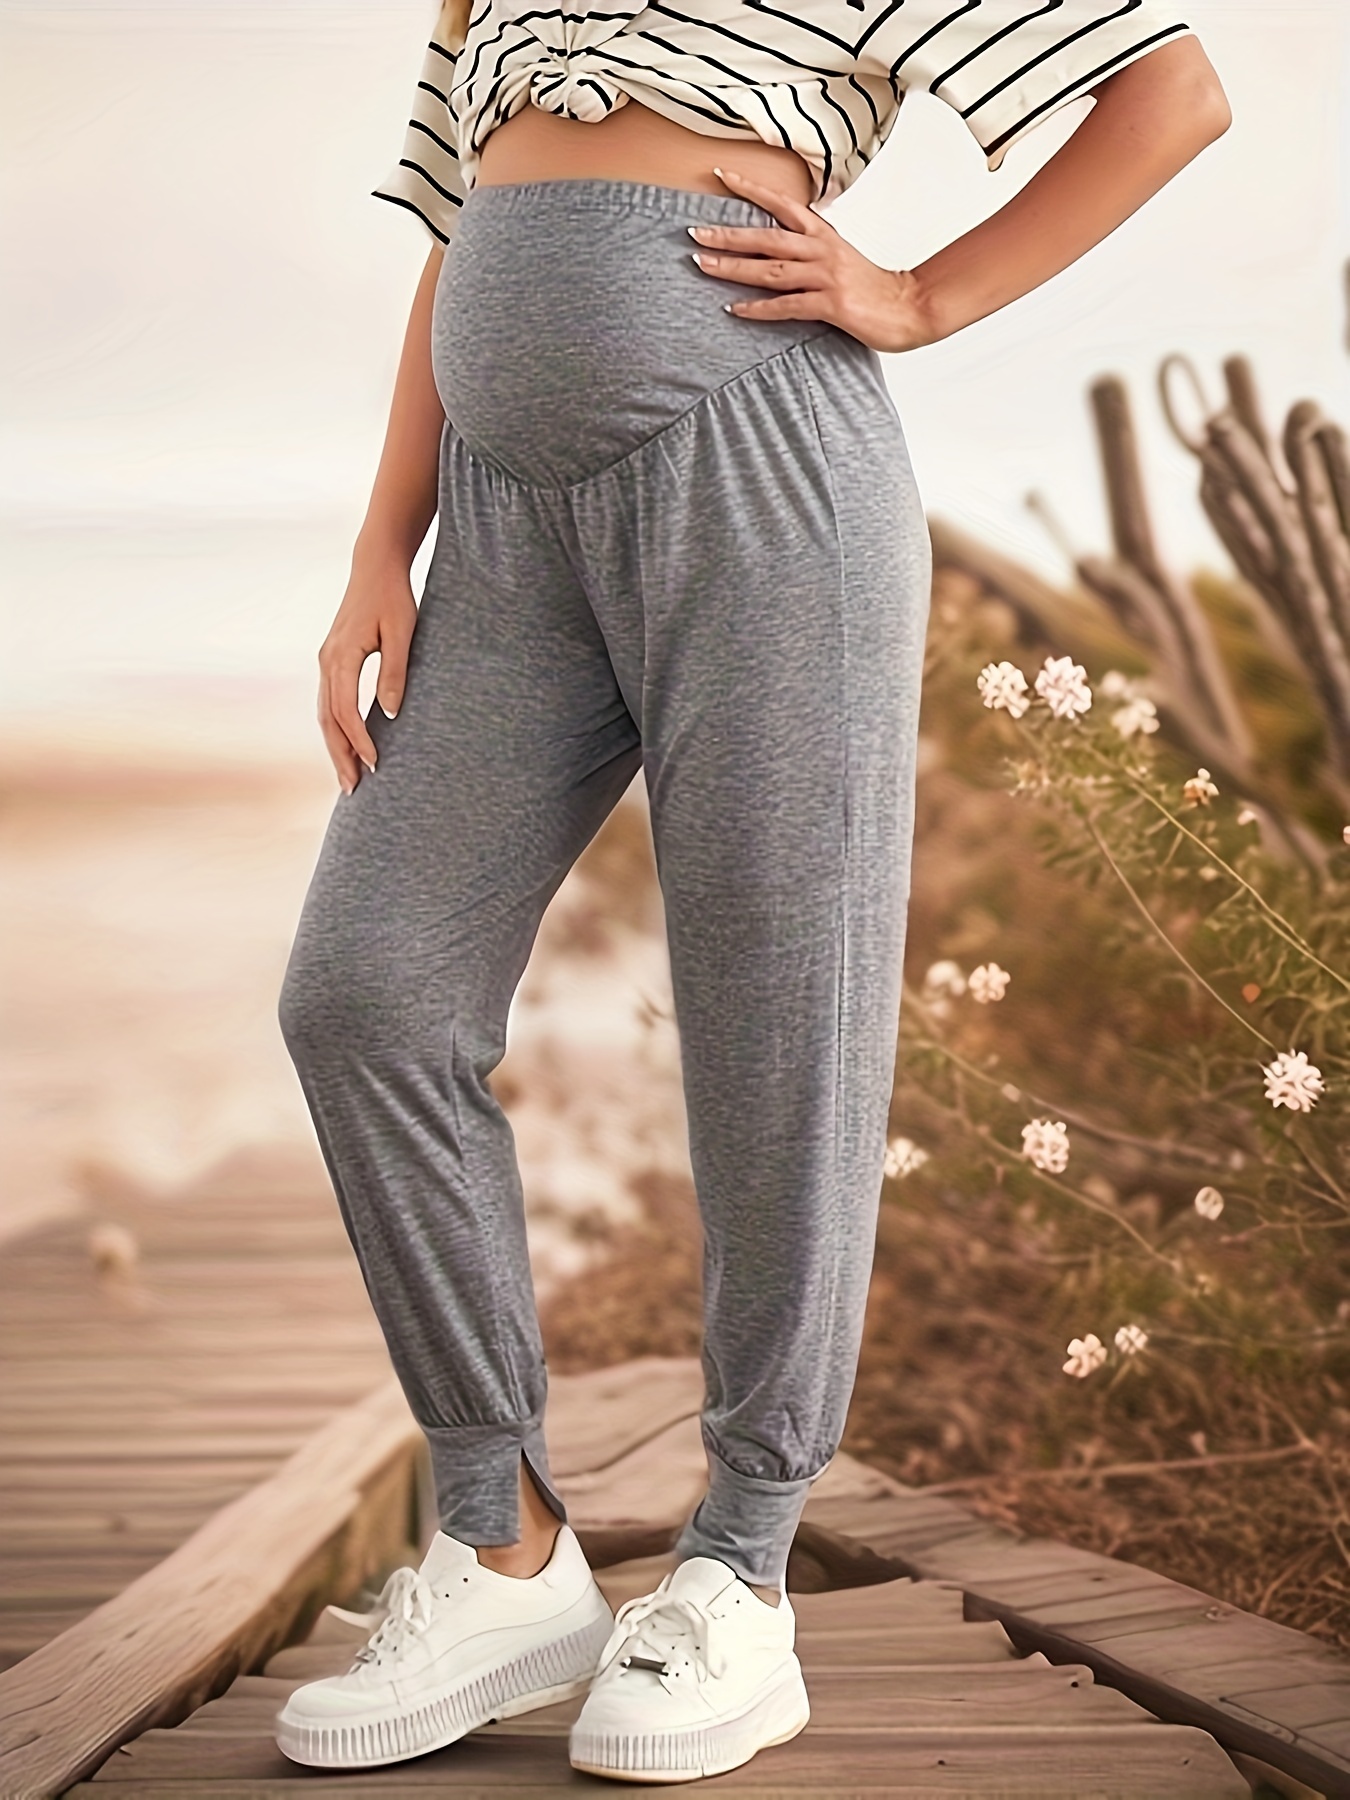 skpabo Leisure trousers for pregnant women, maternity leggings, pregnancy  trousers, comfortable stretch jogging bottoms 